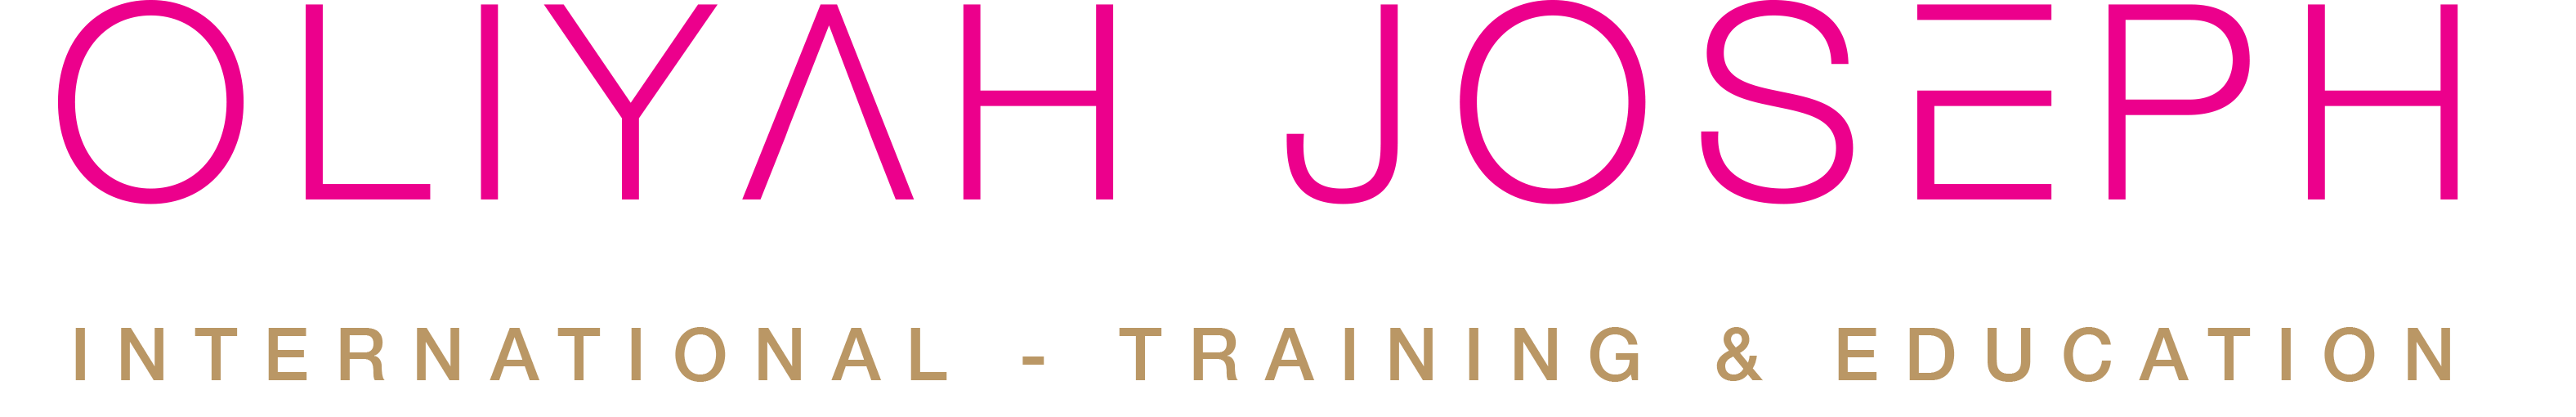 Oliyah Joseph International Training & Education Logo